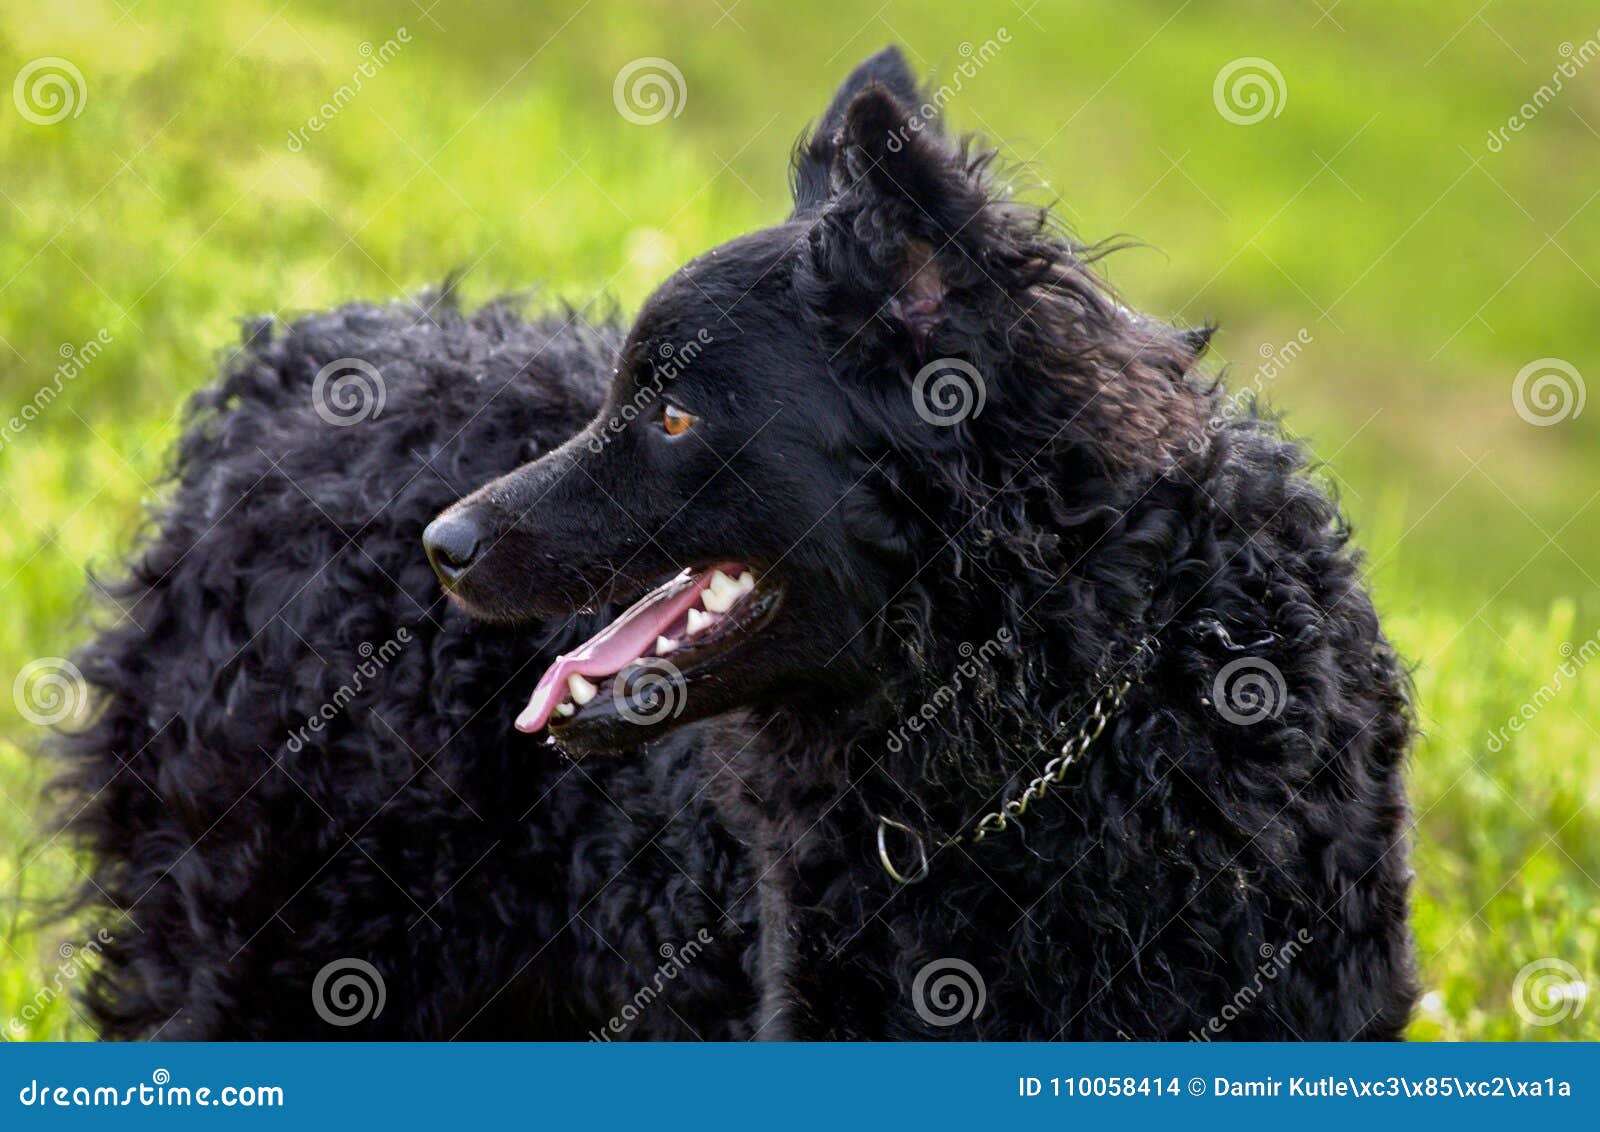 black dog croatian shepherd rea